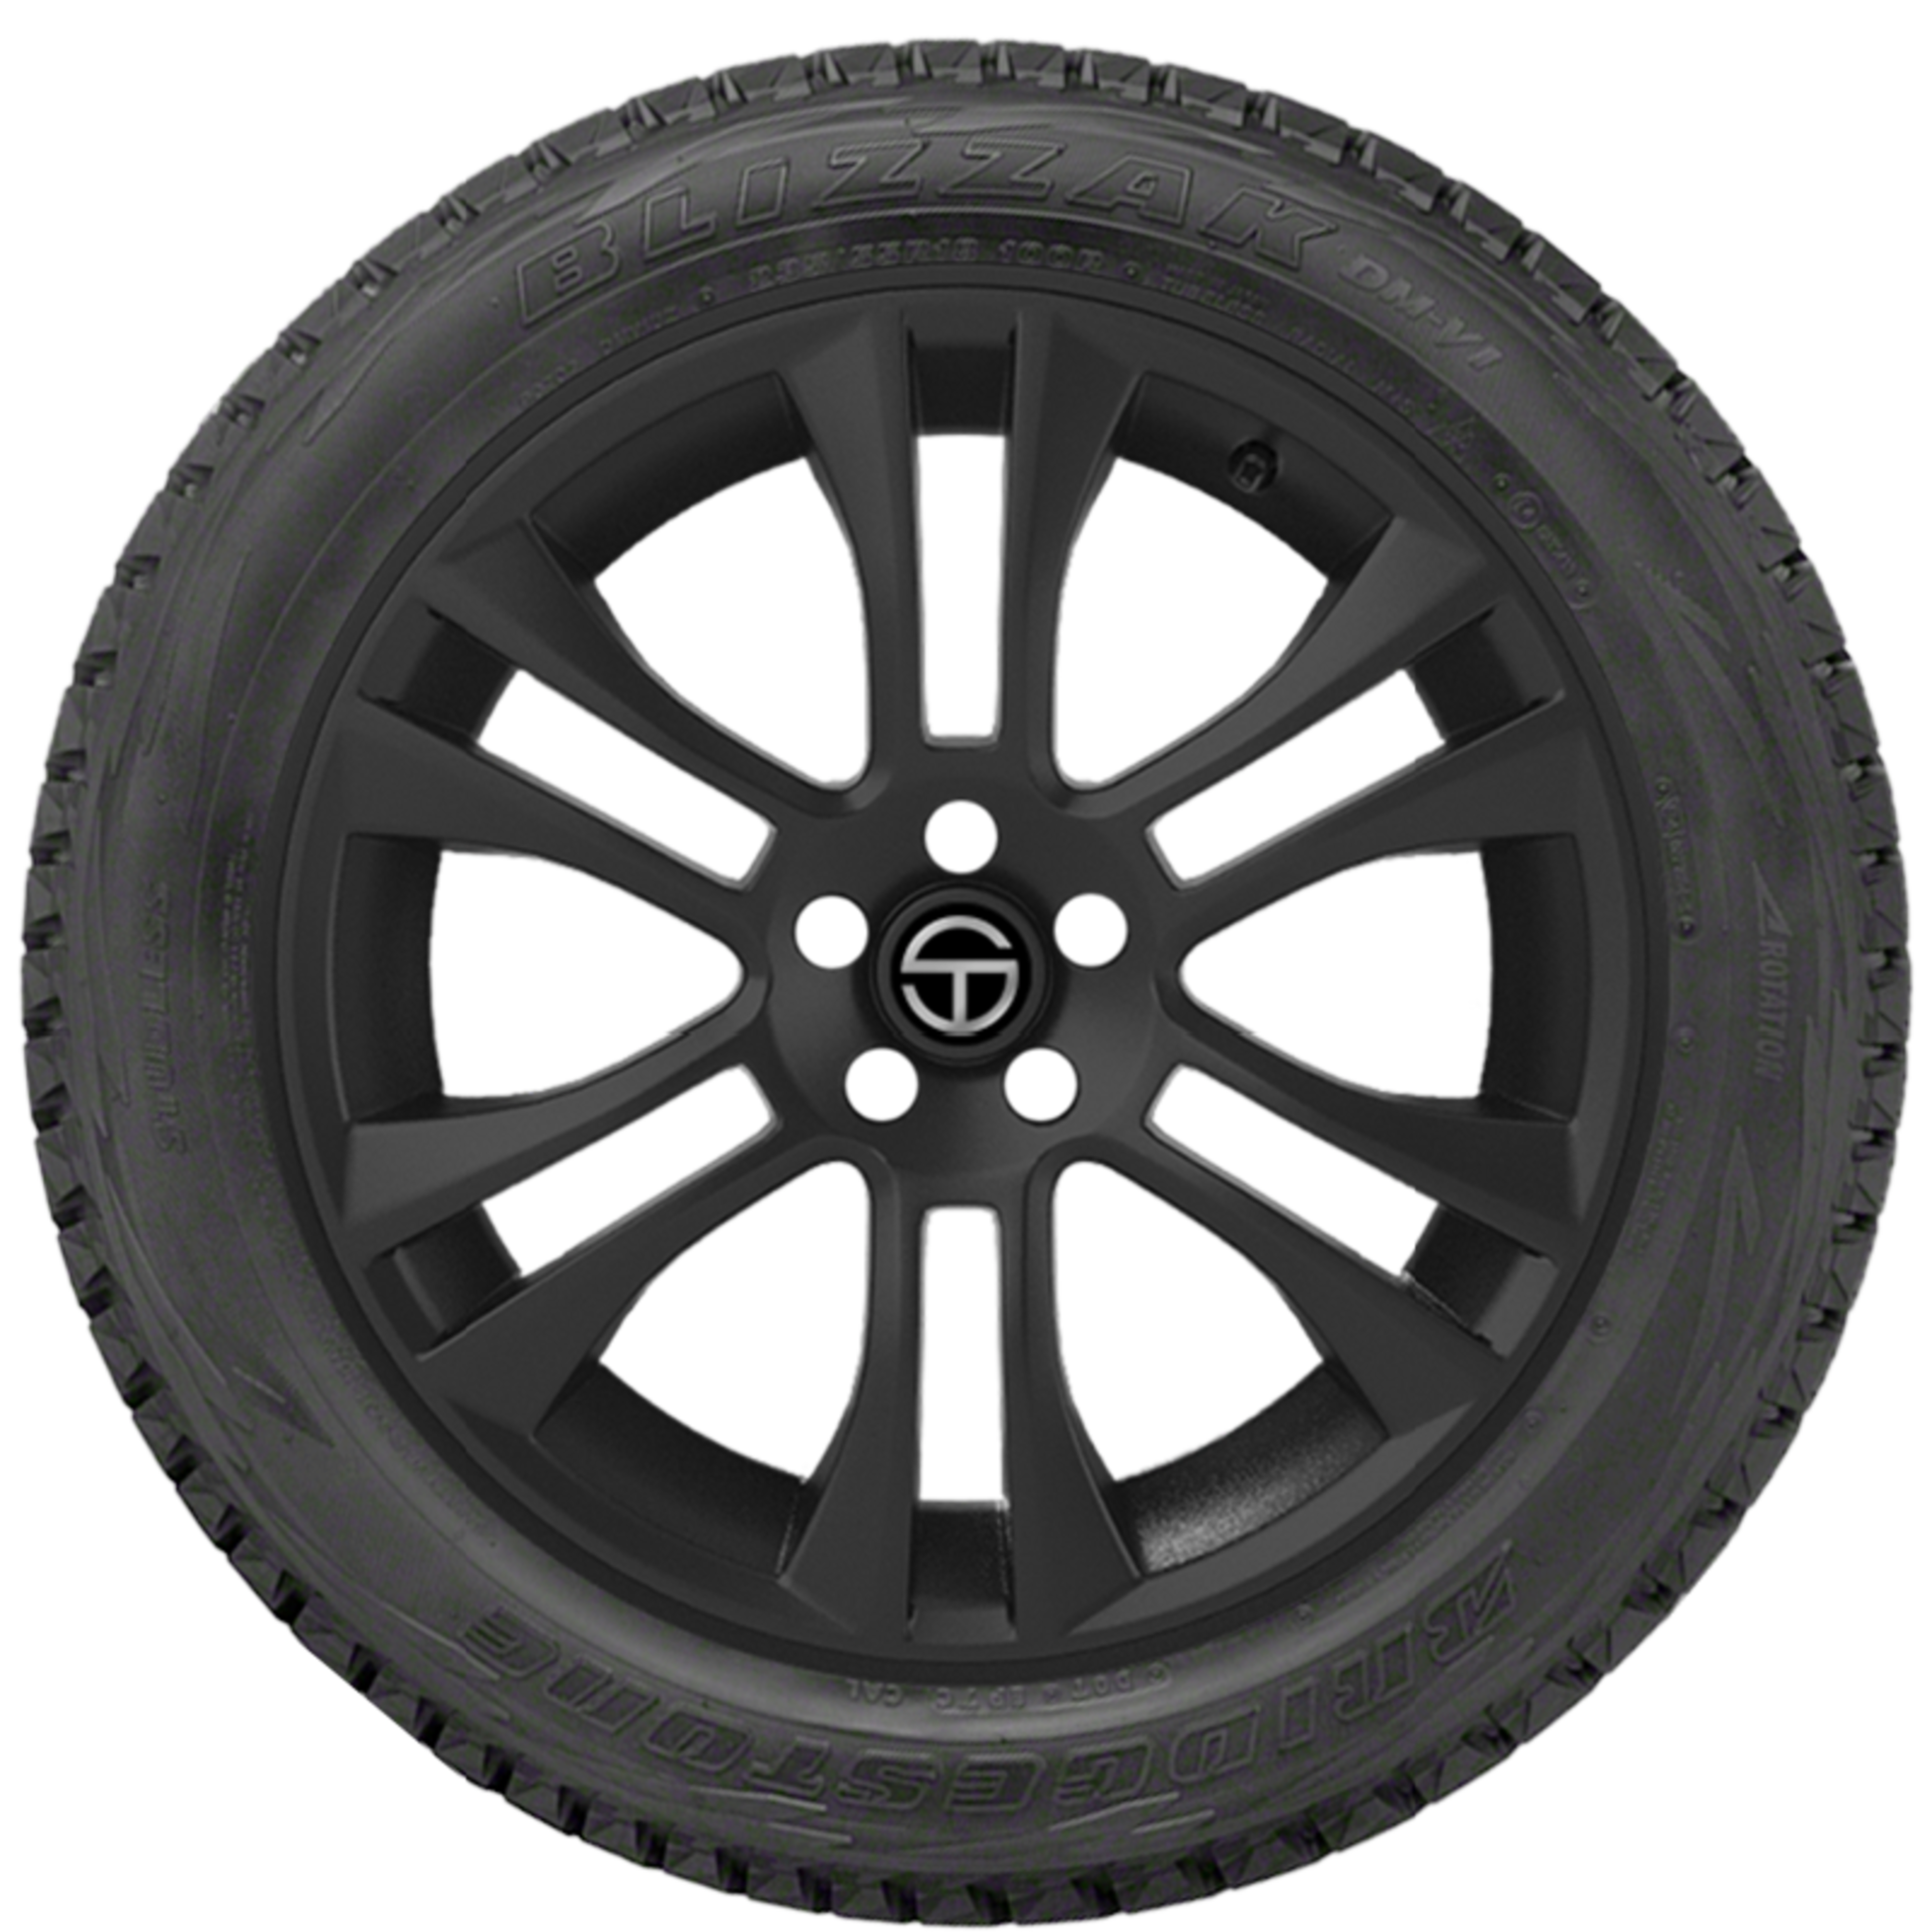 Buy Bridgestone Blizzak DM-V1 Tires Online | SimpleTire